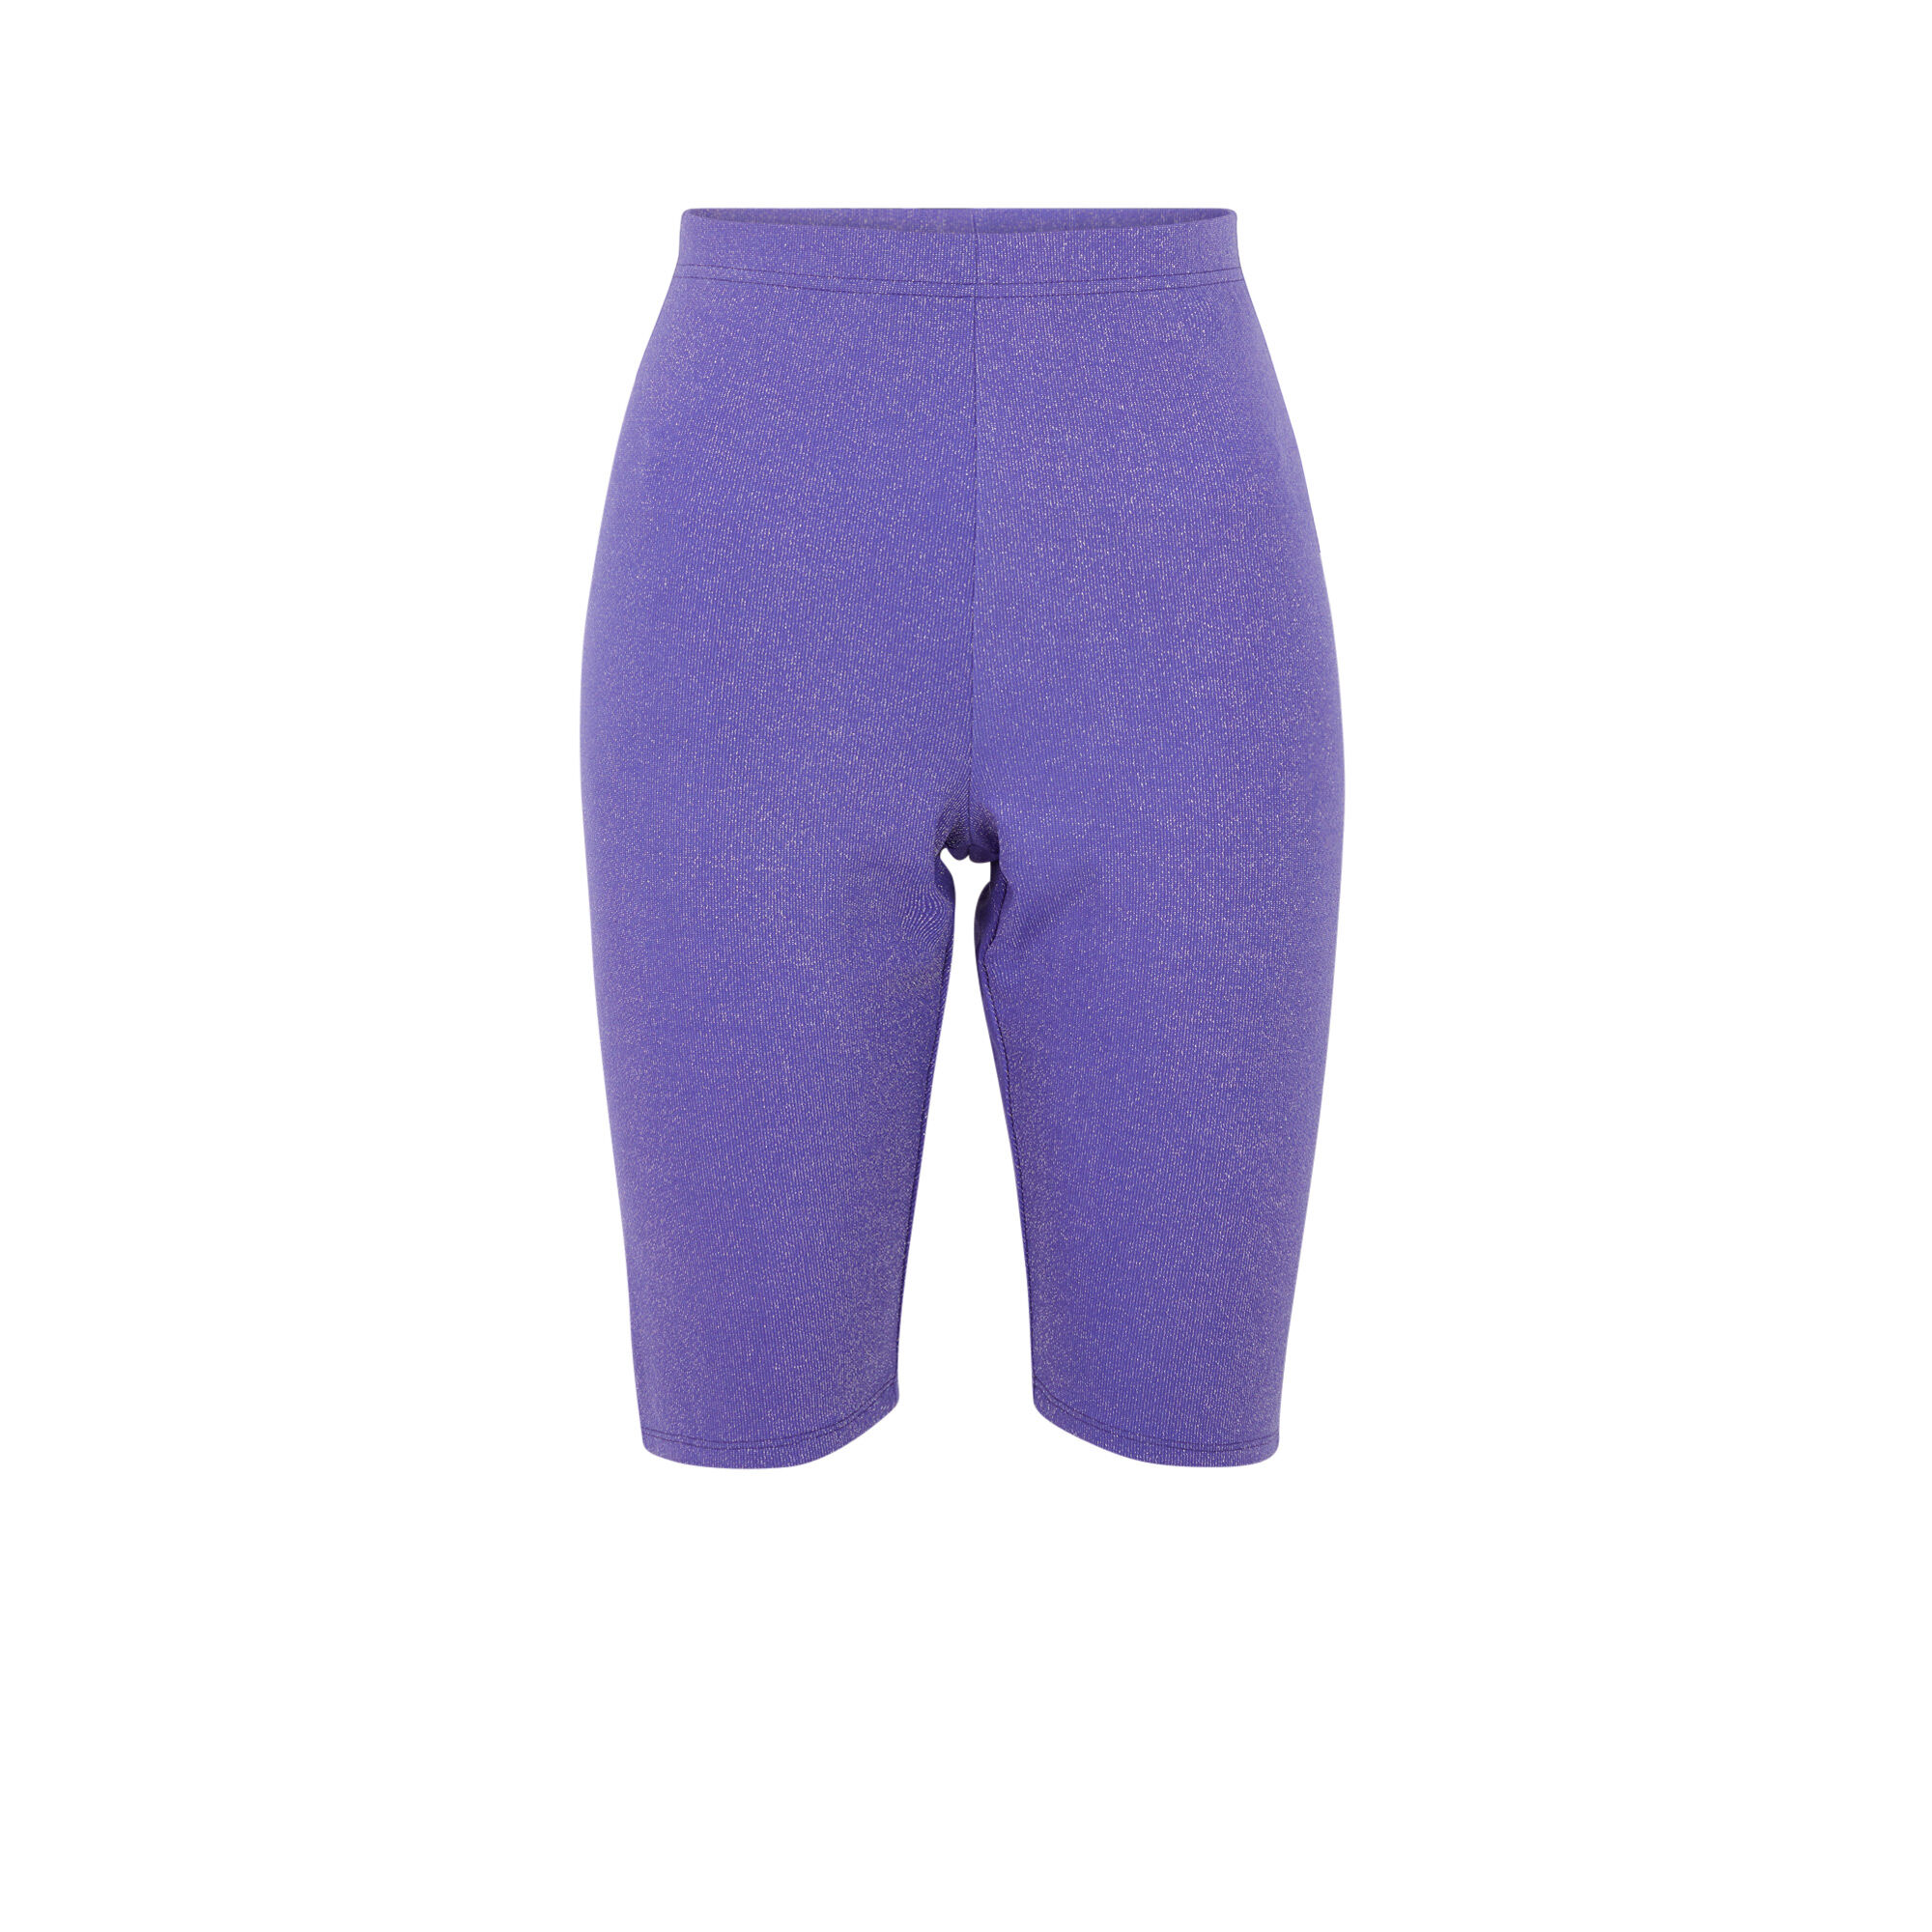 purple cycling shorts